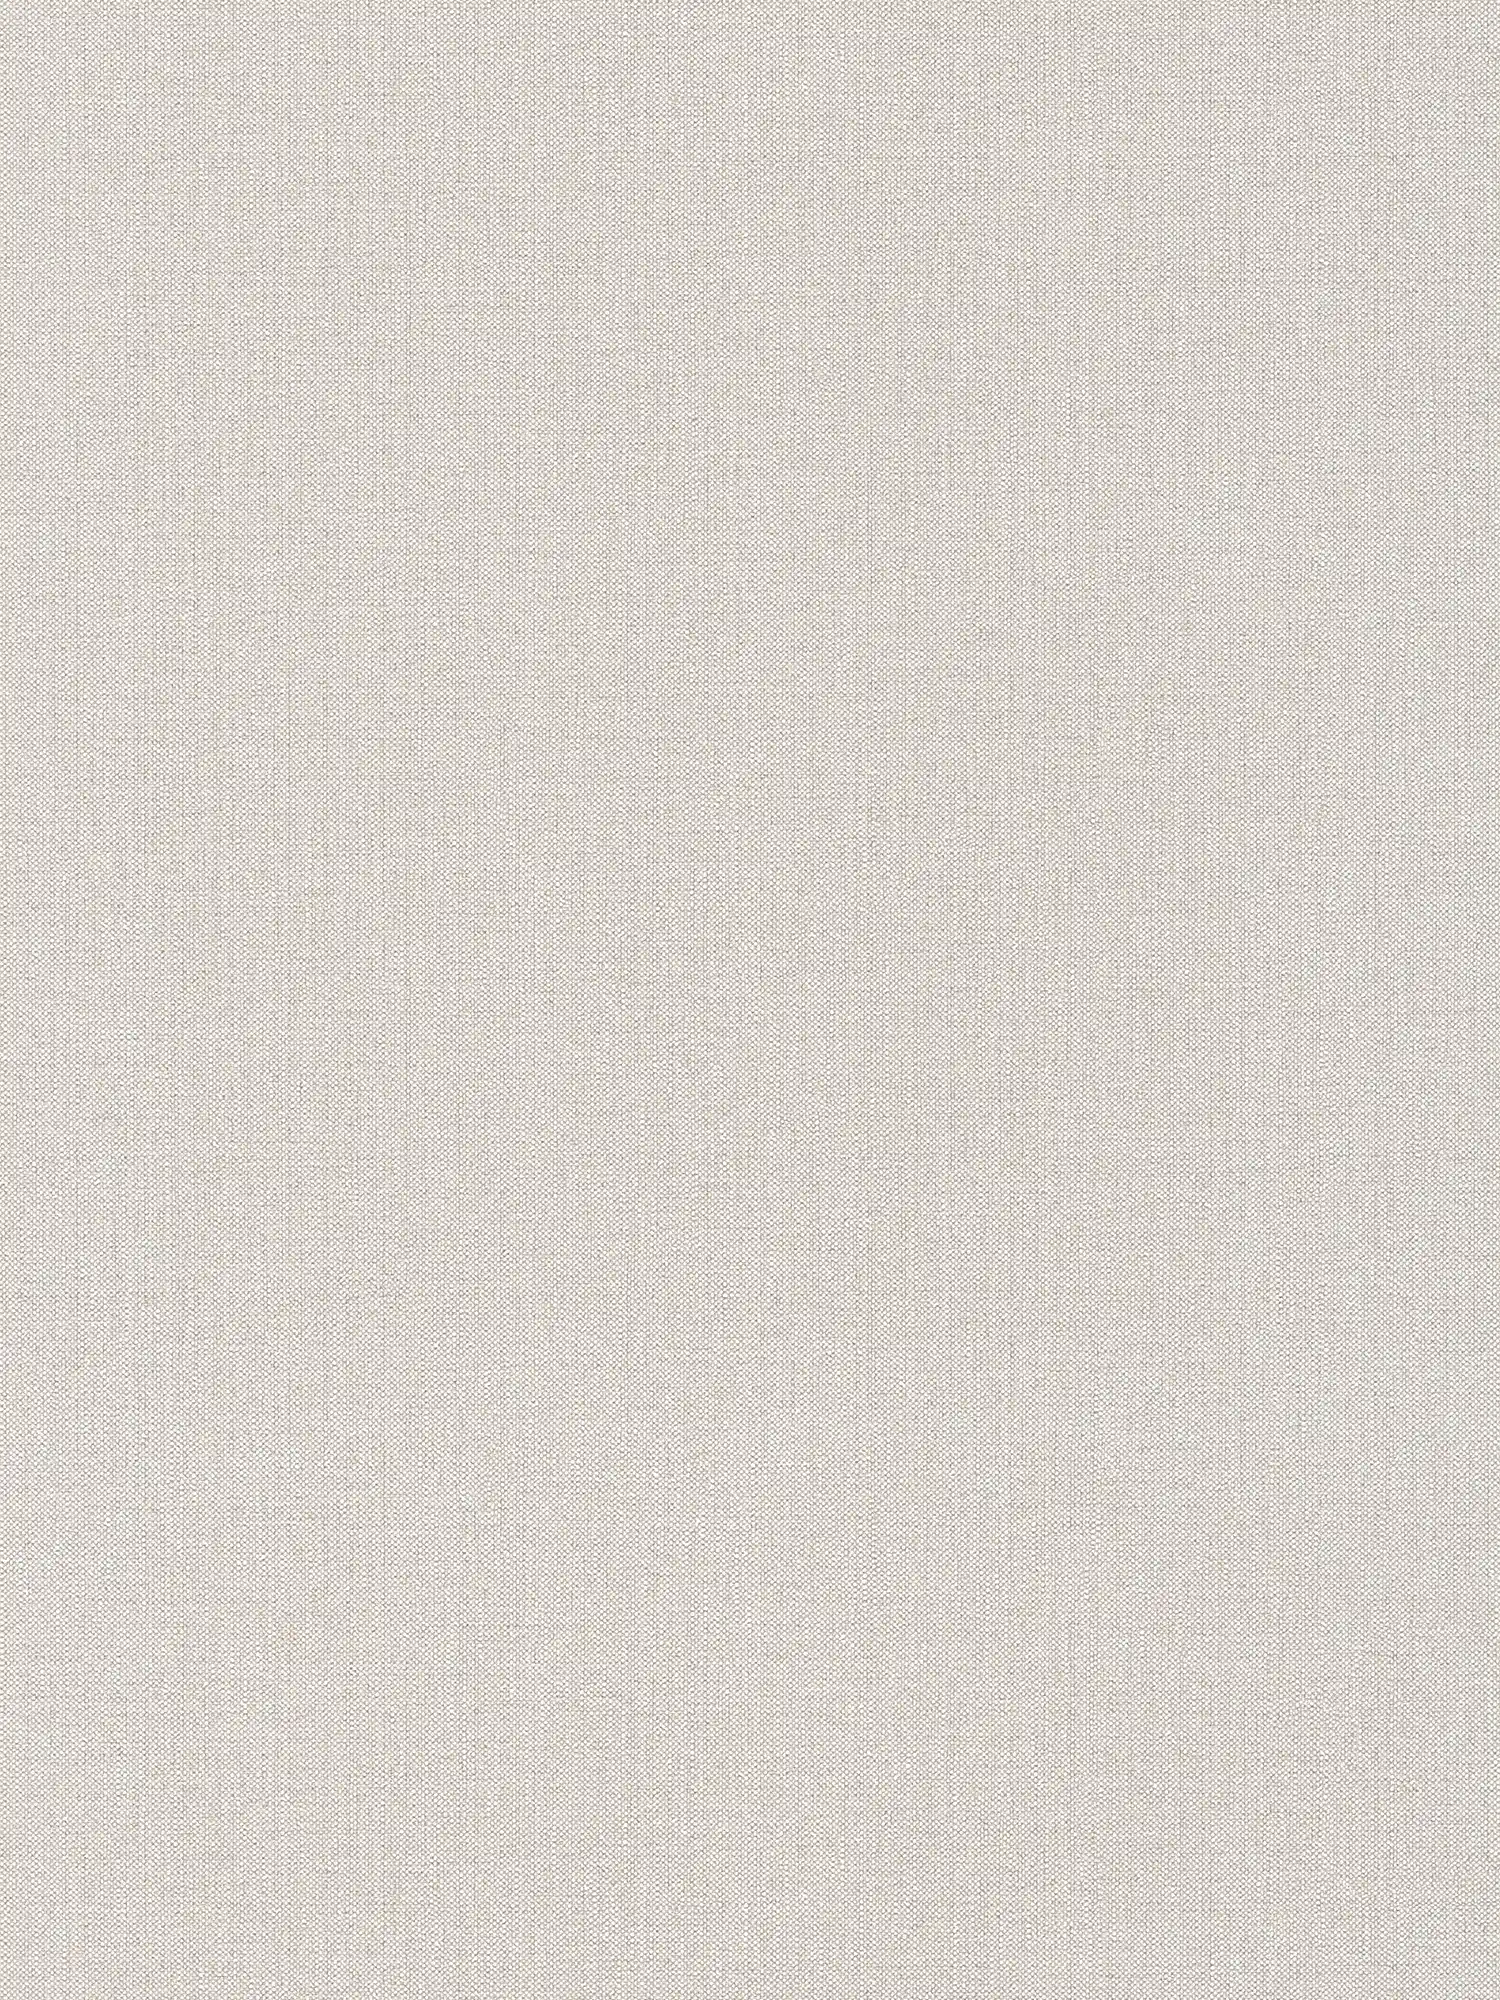 Linen optics wallpaper beige grey mottled Scandi style
